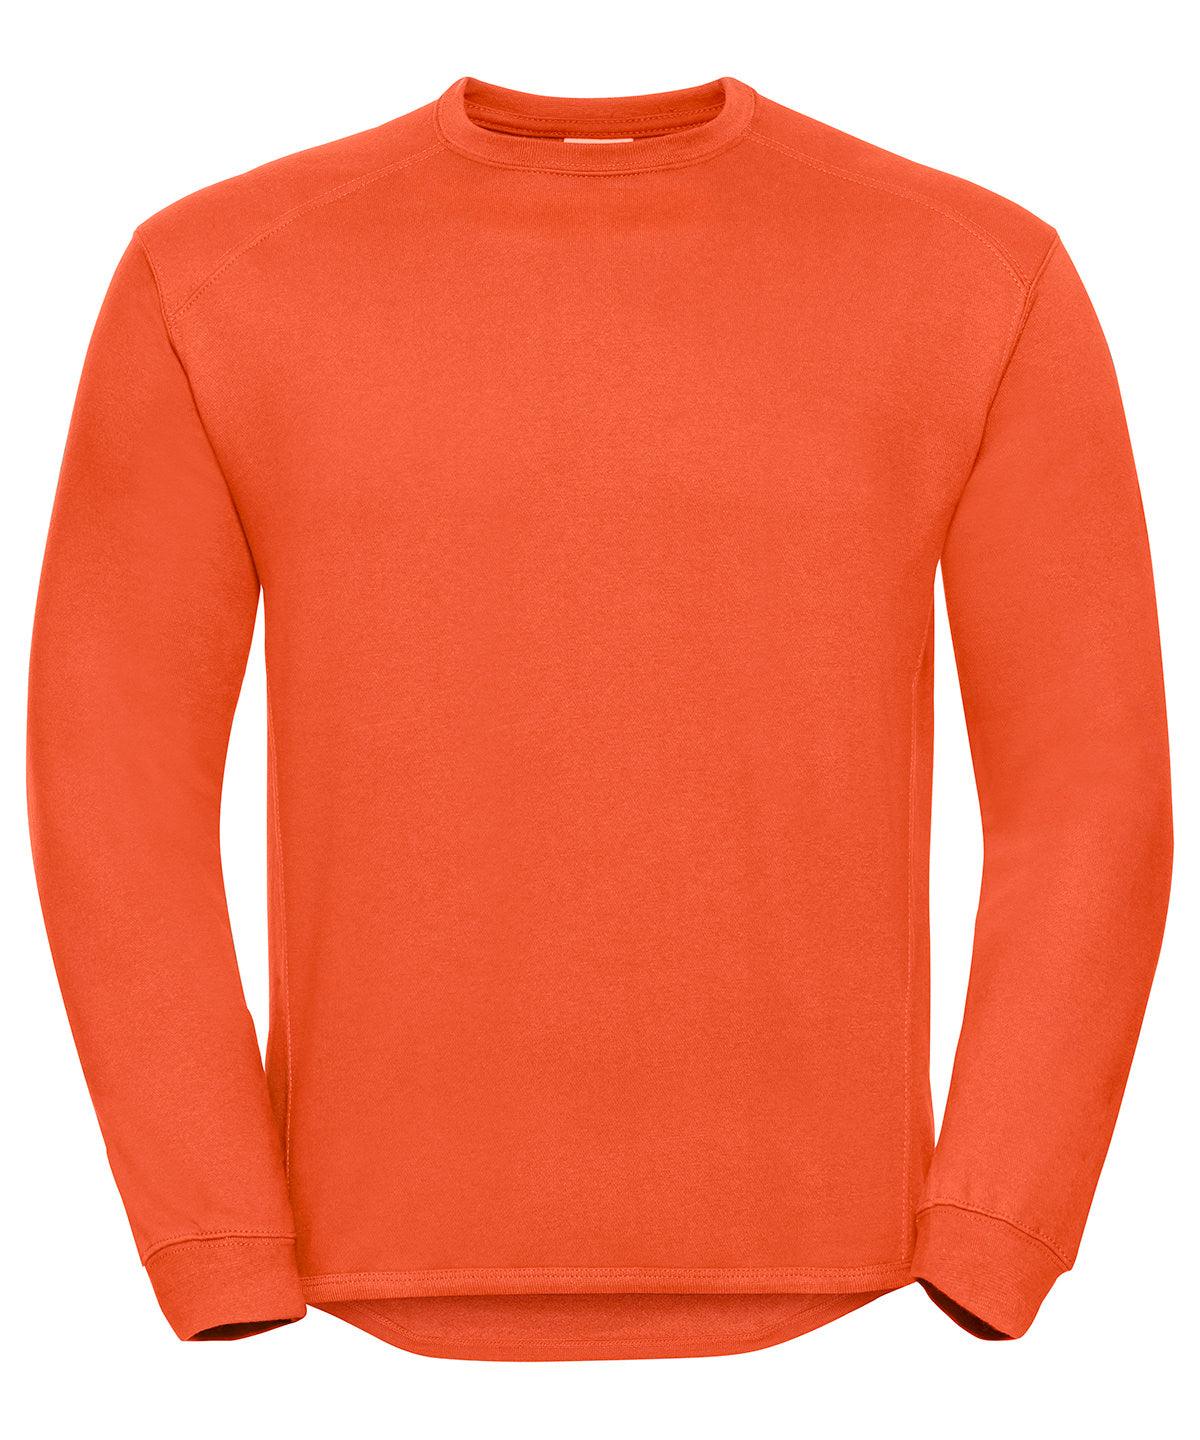 Orange - Heavy-duty crew neck sweatshirt Sweatshirts Russell Europe Must Haves, Plus Sizes, Safe to wash at 60 degrees, Sweatshirts, Workwear Schoolwear Centres